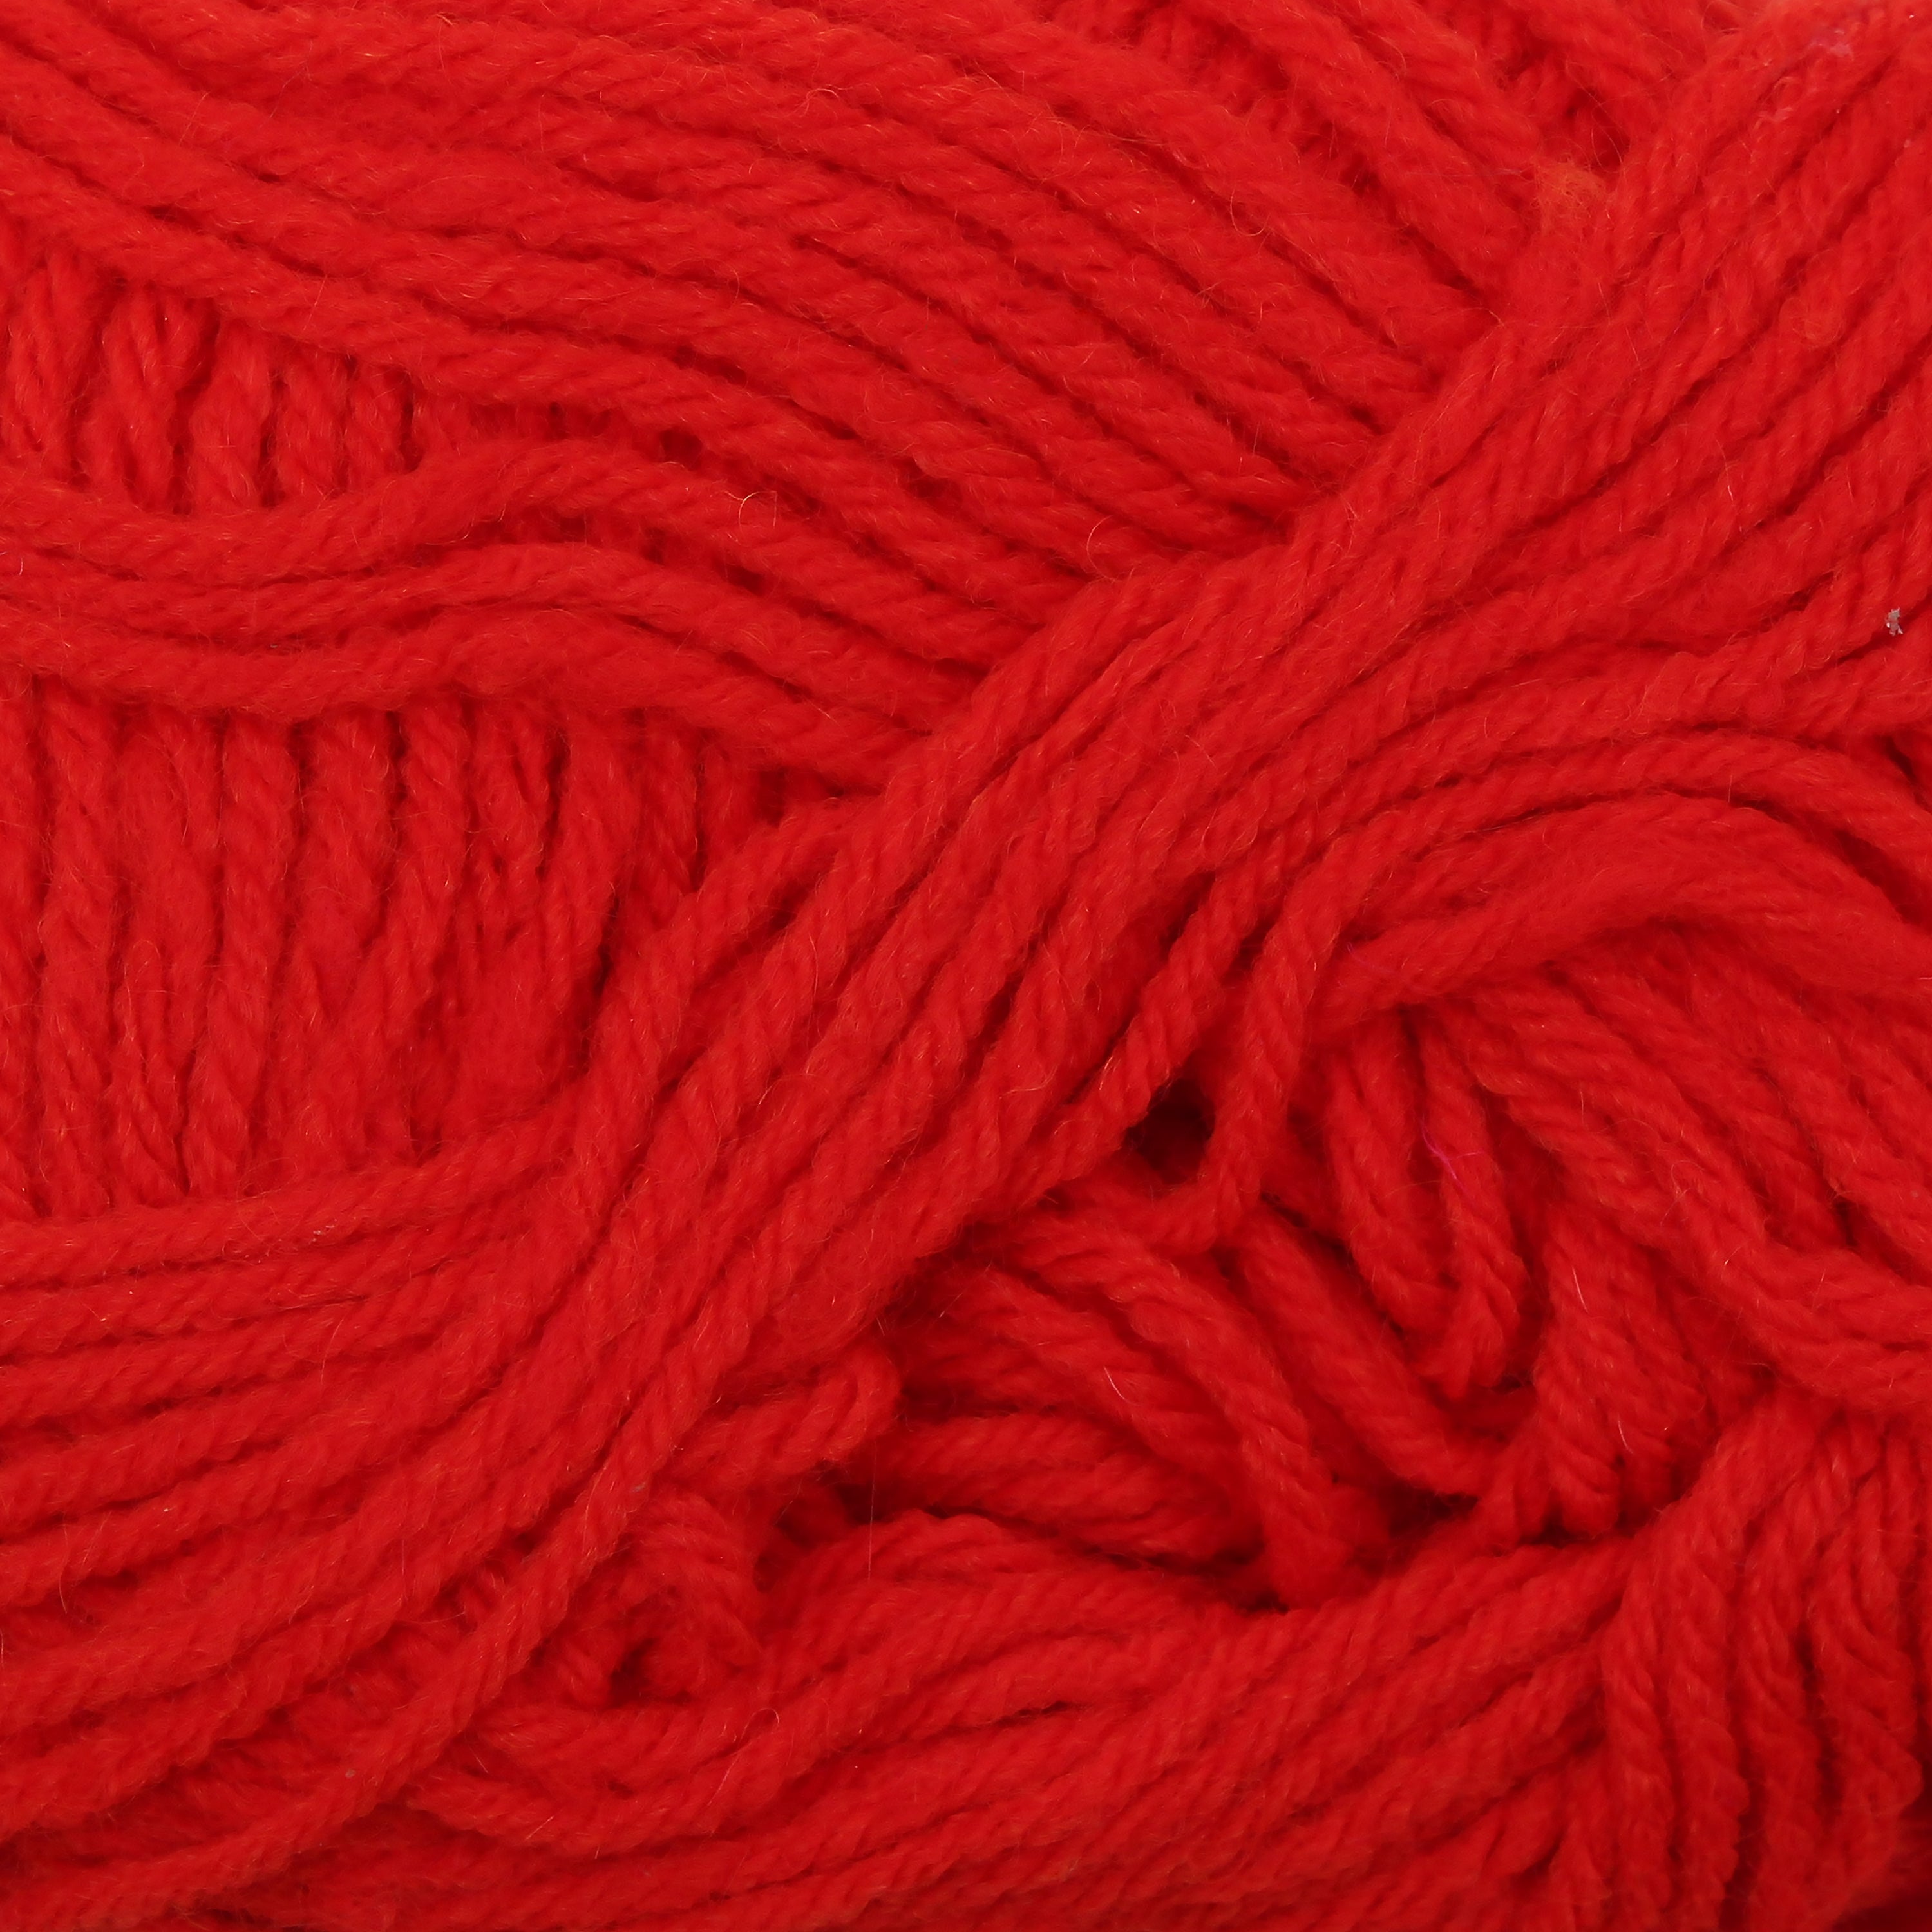 Wool Yarn Red 12G